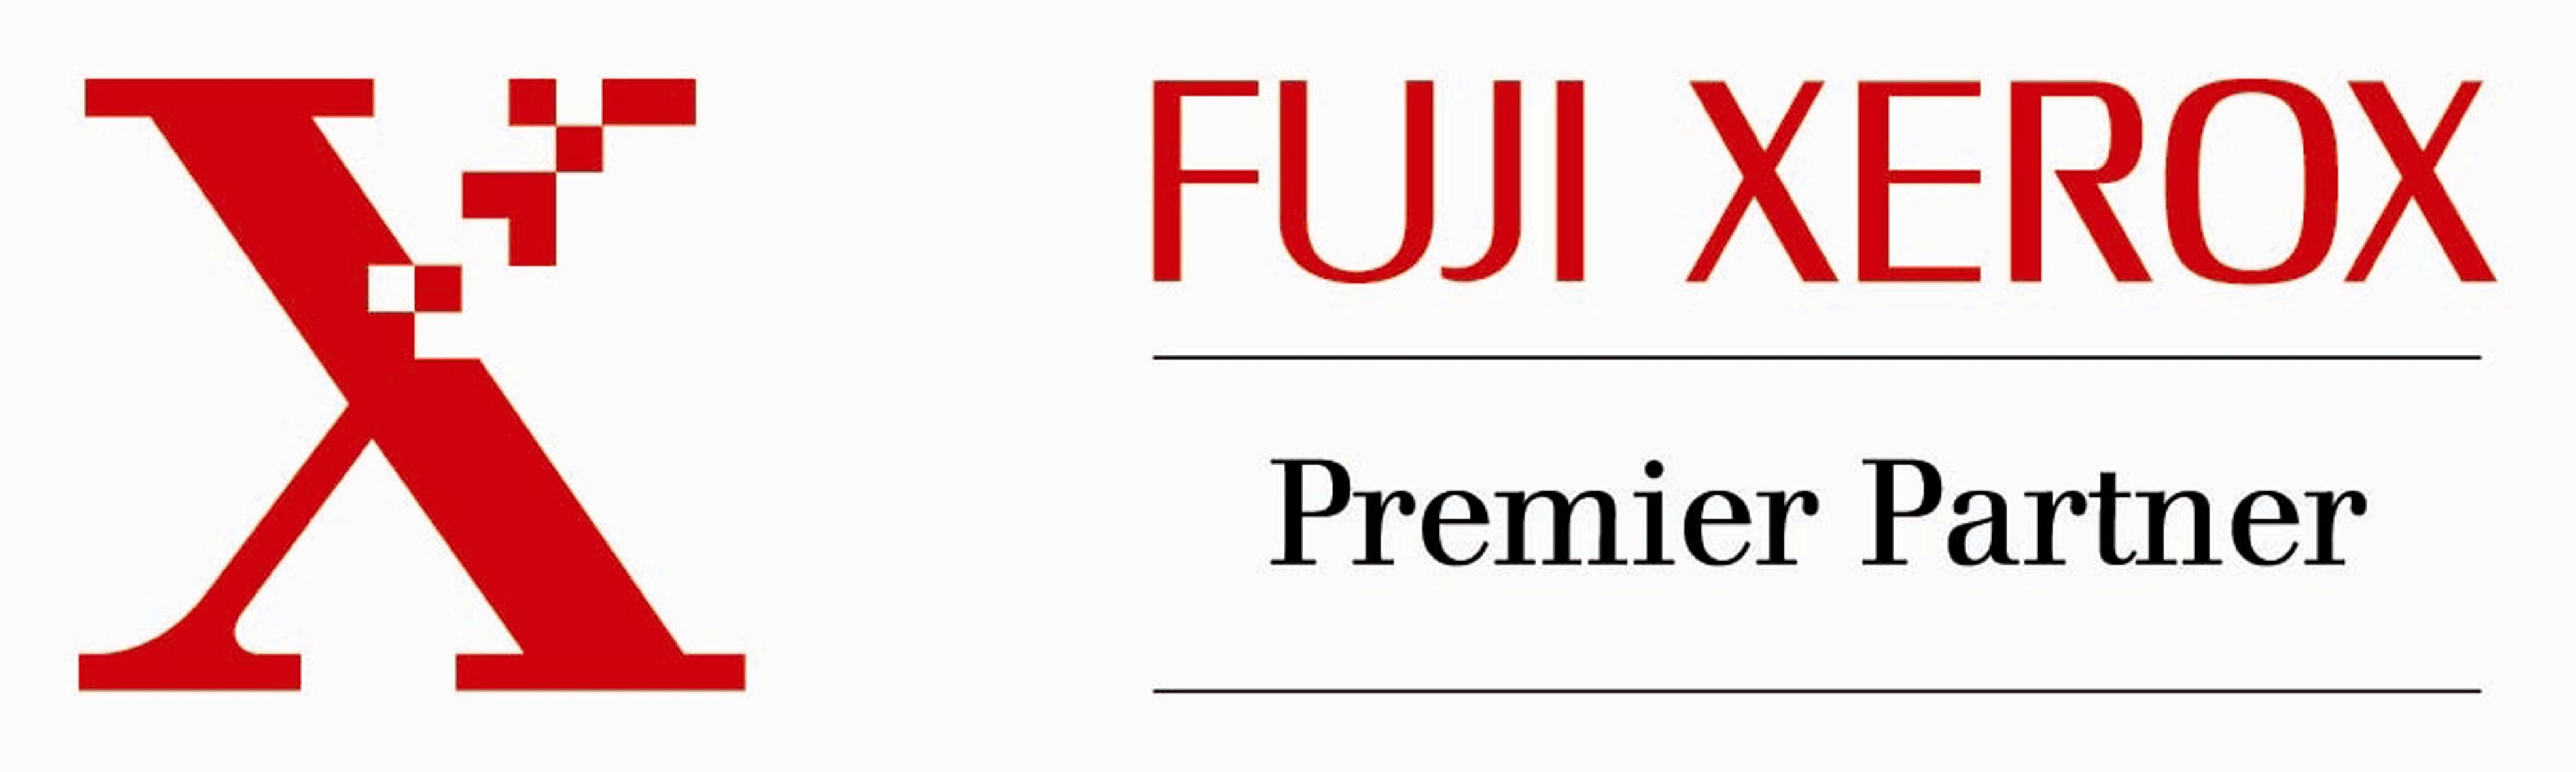 Fuji Xerox Logo - LogoDix